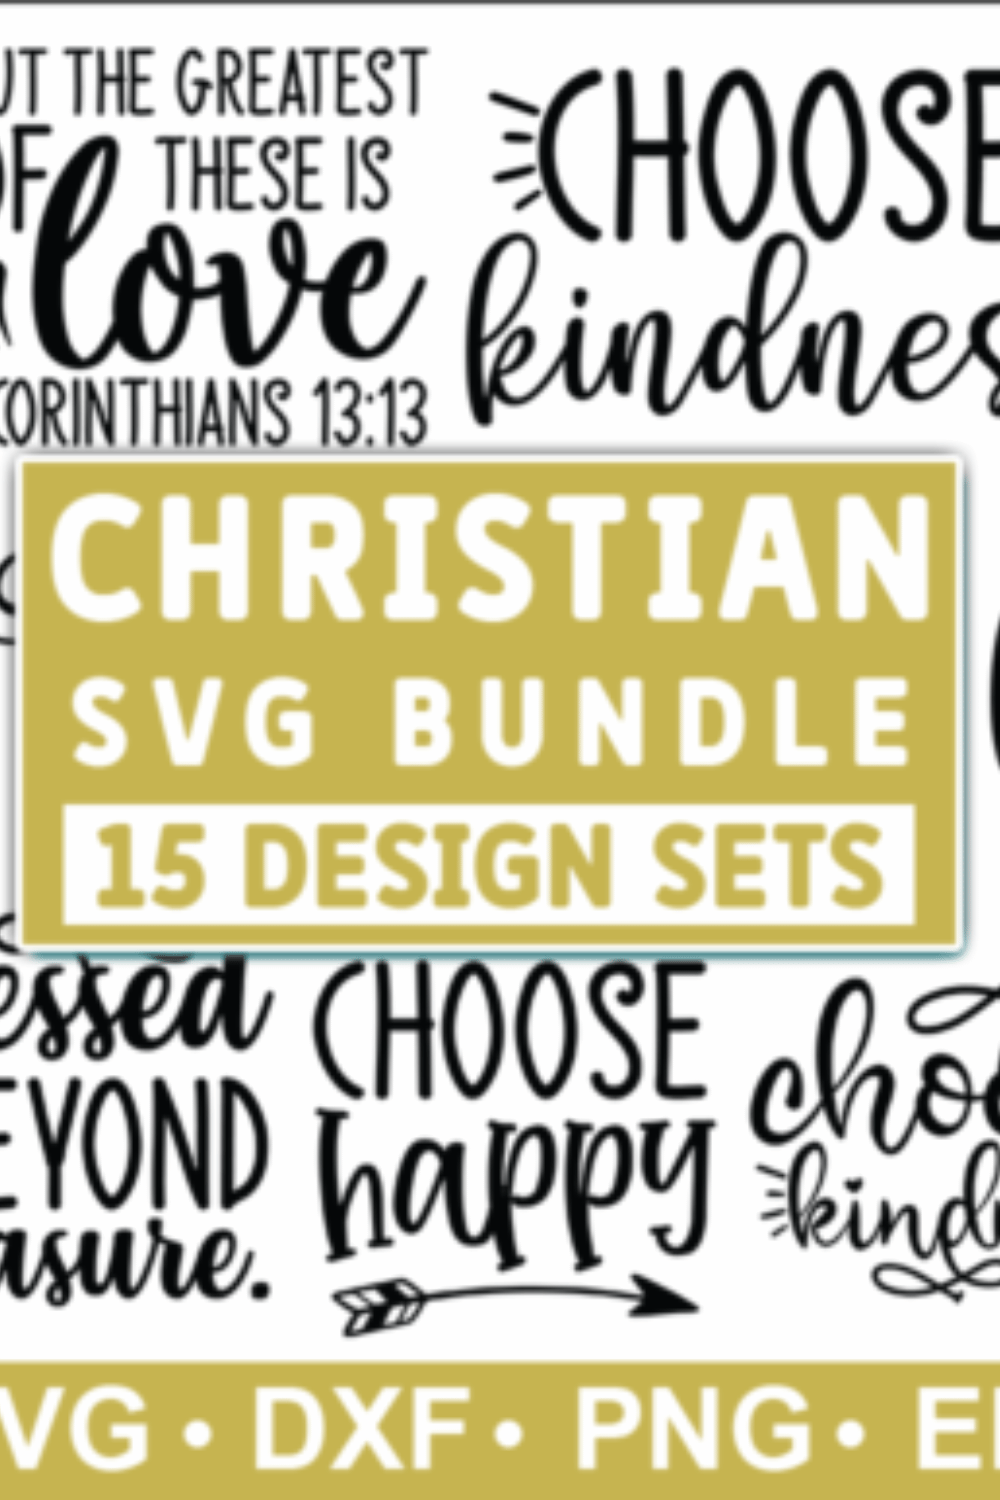 Christian SVG Bundle, Christian Quotes pinterest preview image.